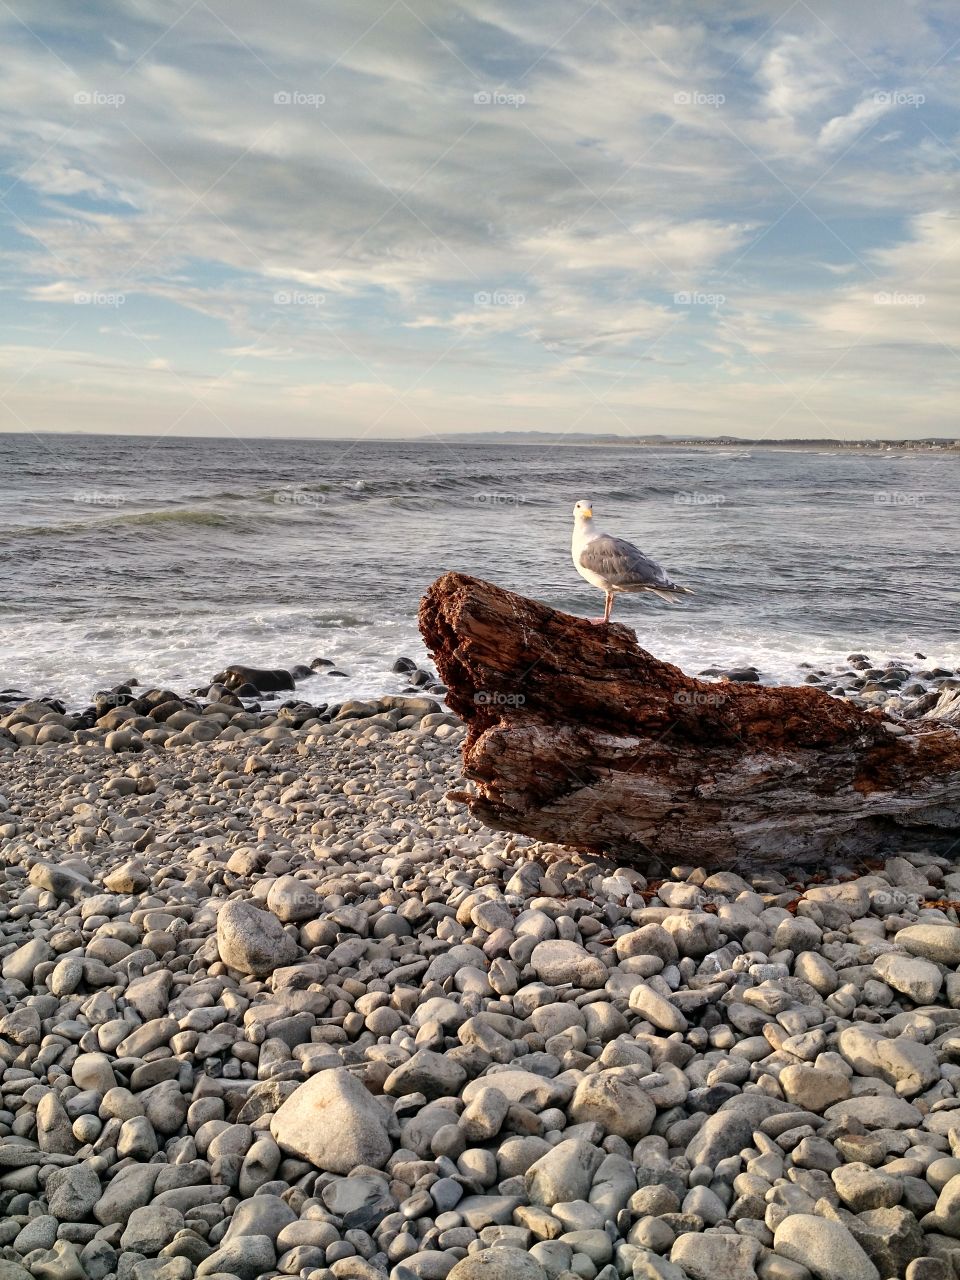 Seaside OR Seagull. 2015